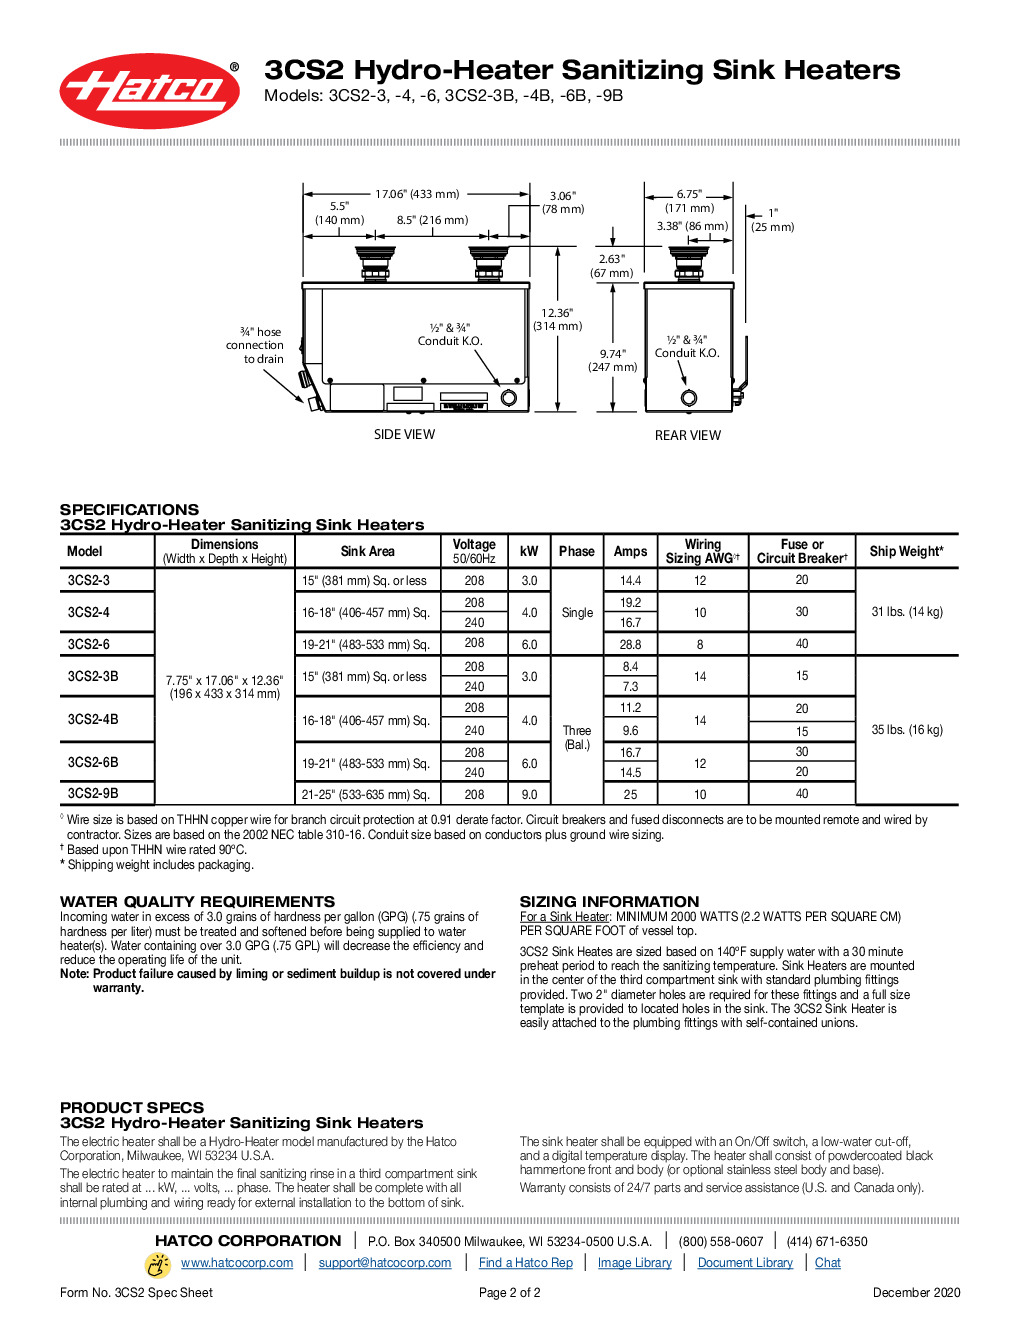 Hatco 3CS2-9B Electric Sink Heater